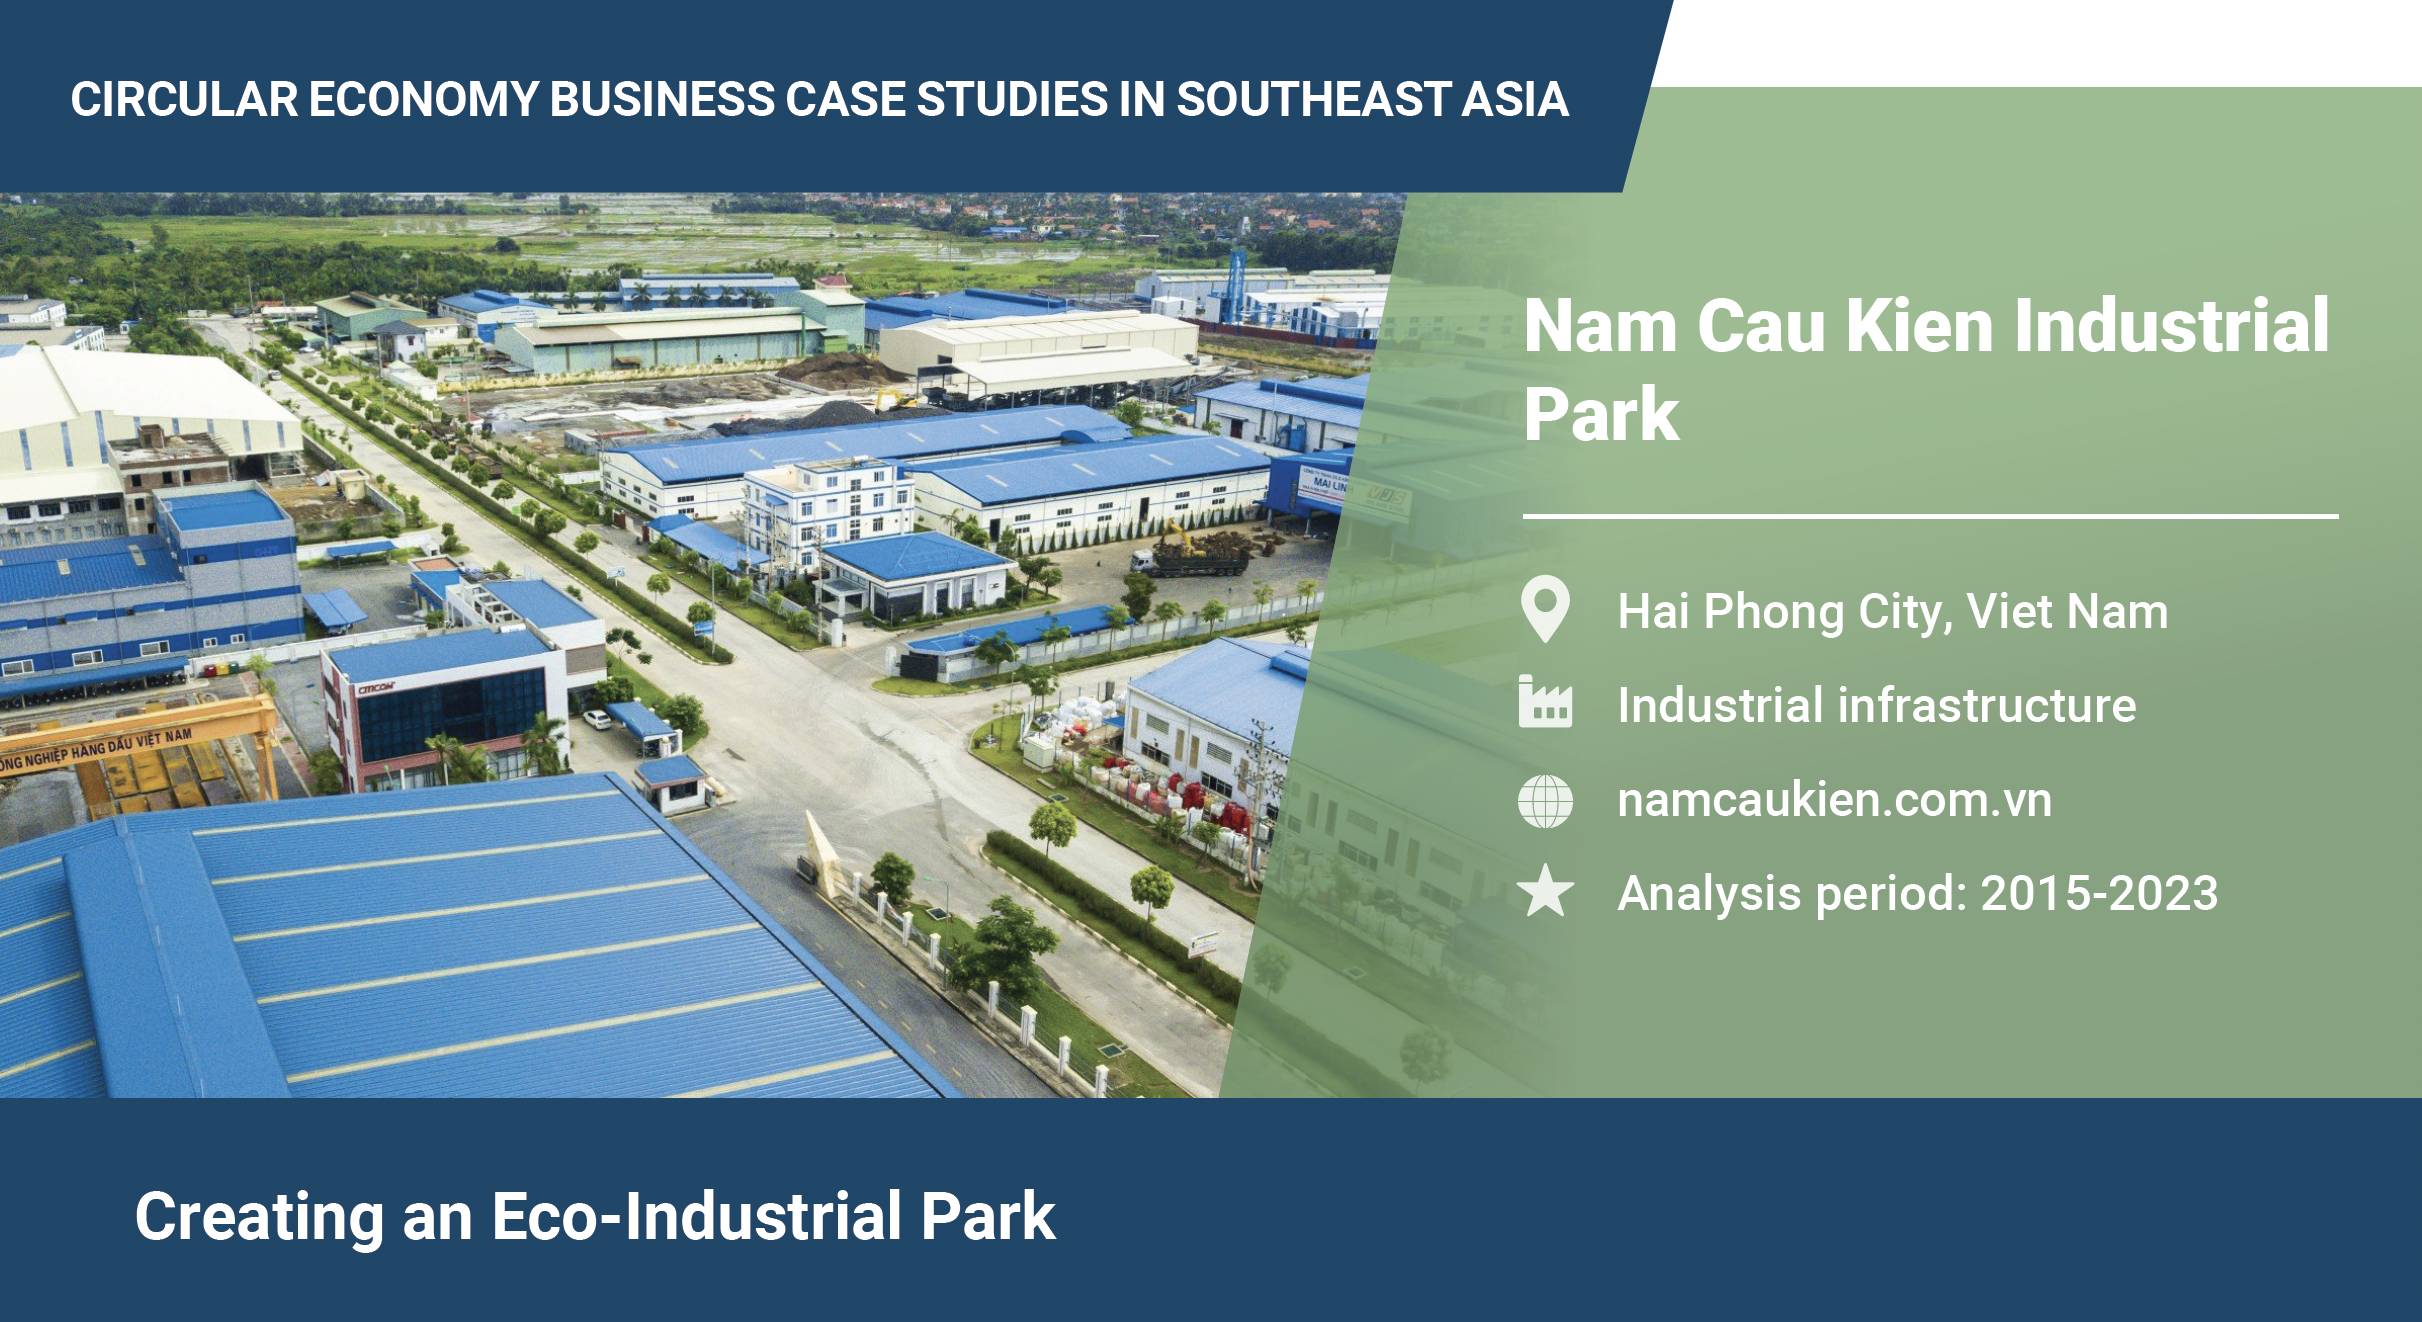 Nam Cau Kien Industrial Park4103